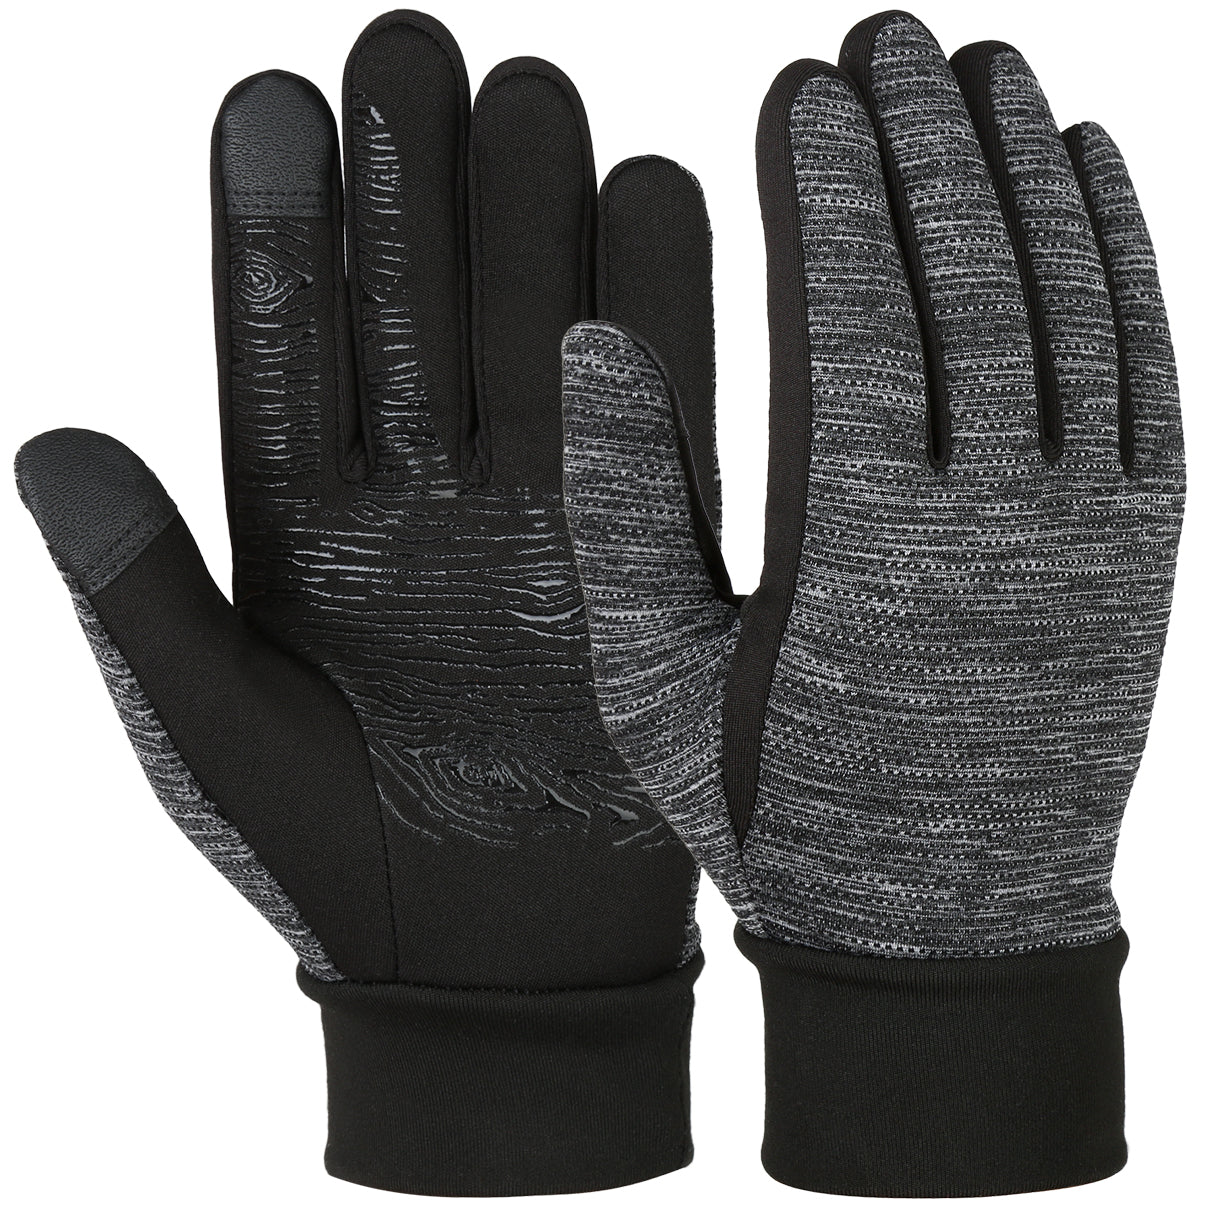 Vbiger Winter Gloves for Men Women Anti-Slip Touchscreen Gloves Texting Gloves Warm Gloves Flexible Outdoor Sports Gloves Cold Weather Gloves, Black, M